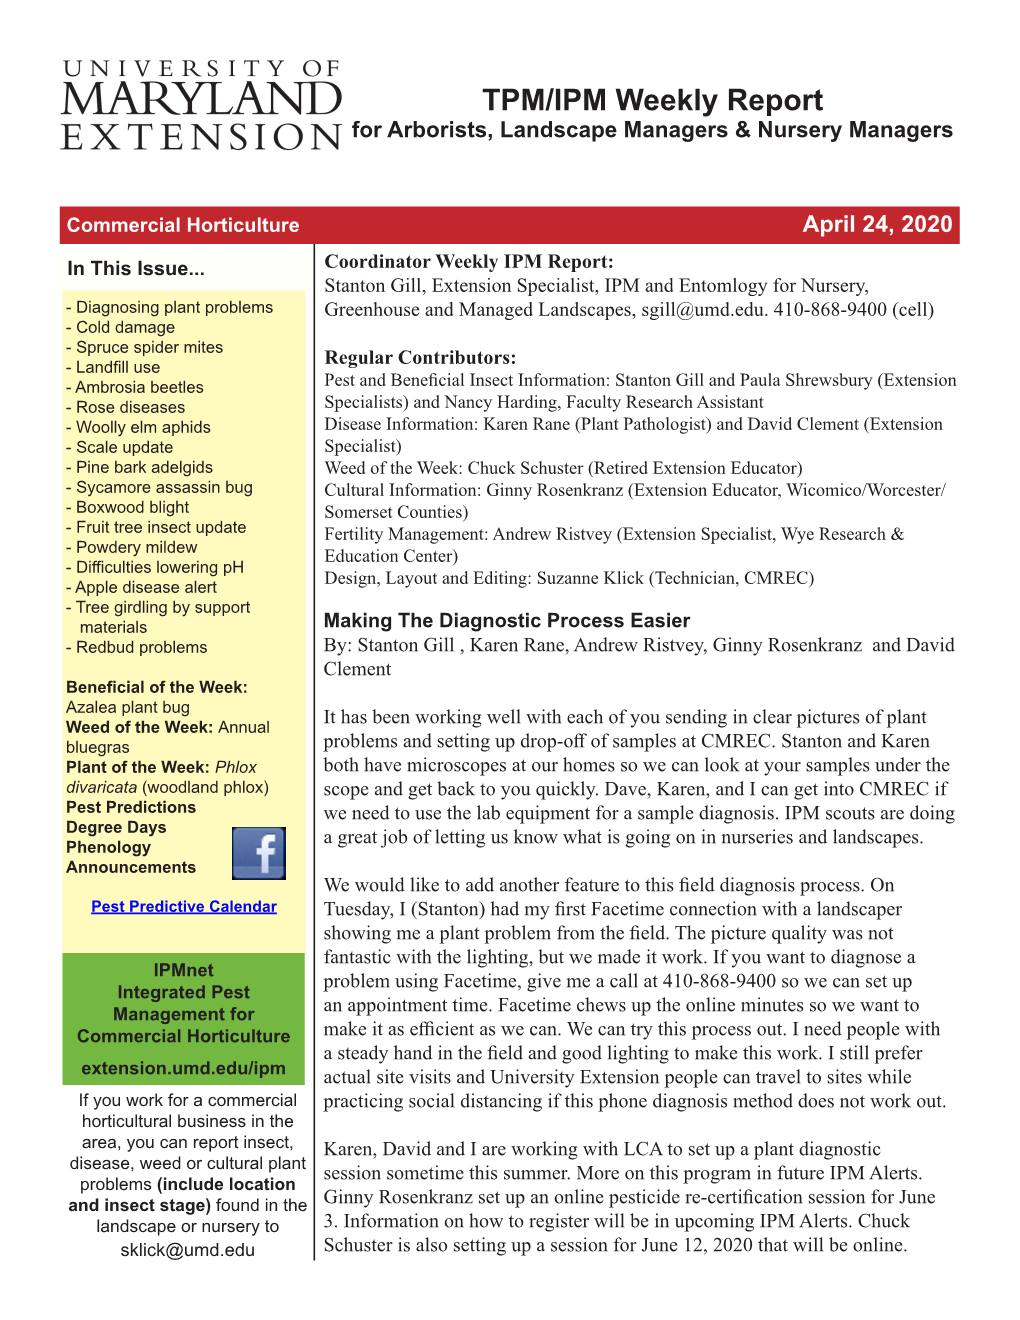 April 24, 2020 Landscape and Nursery IPM Special Alert